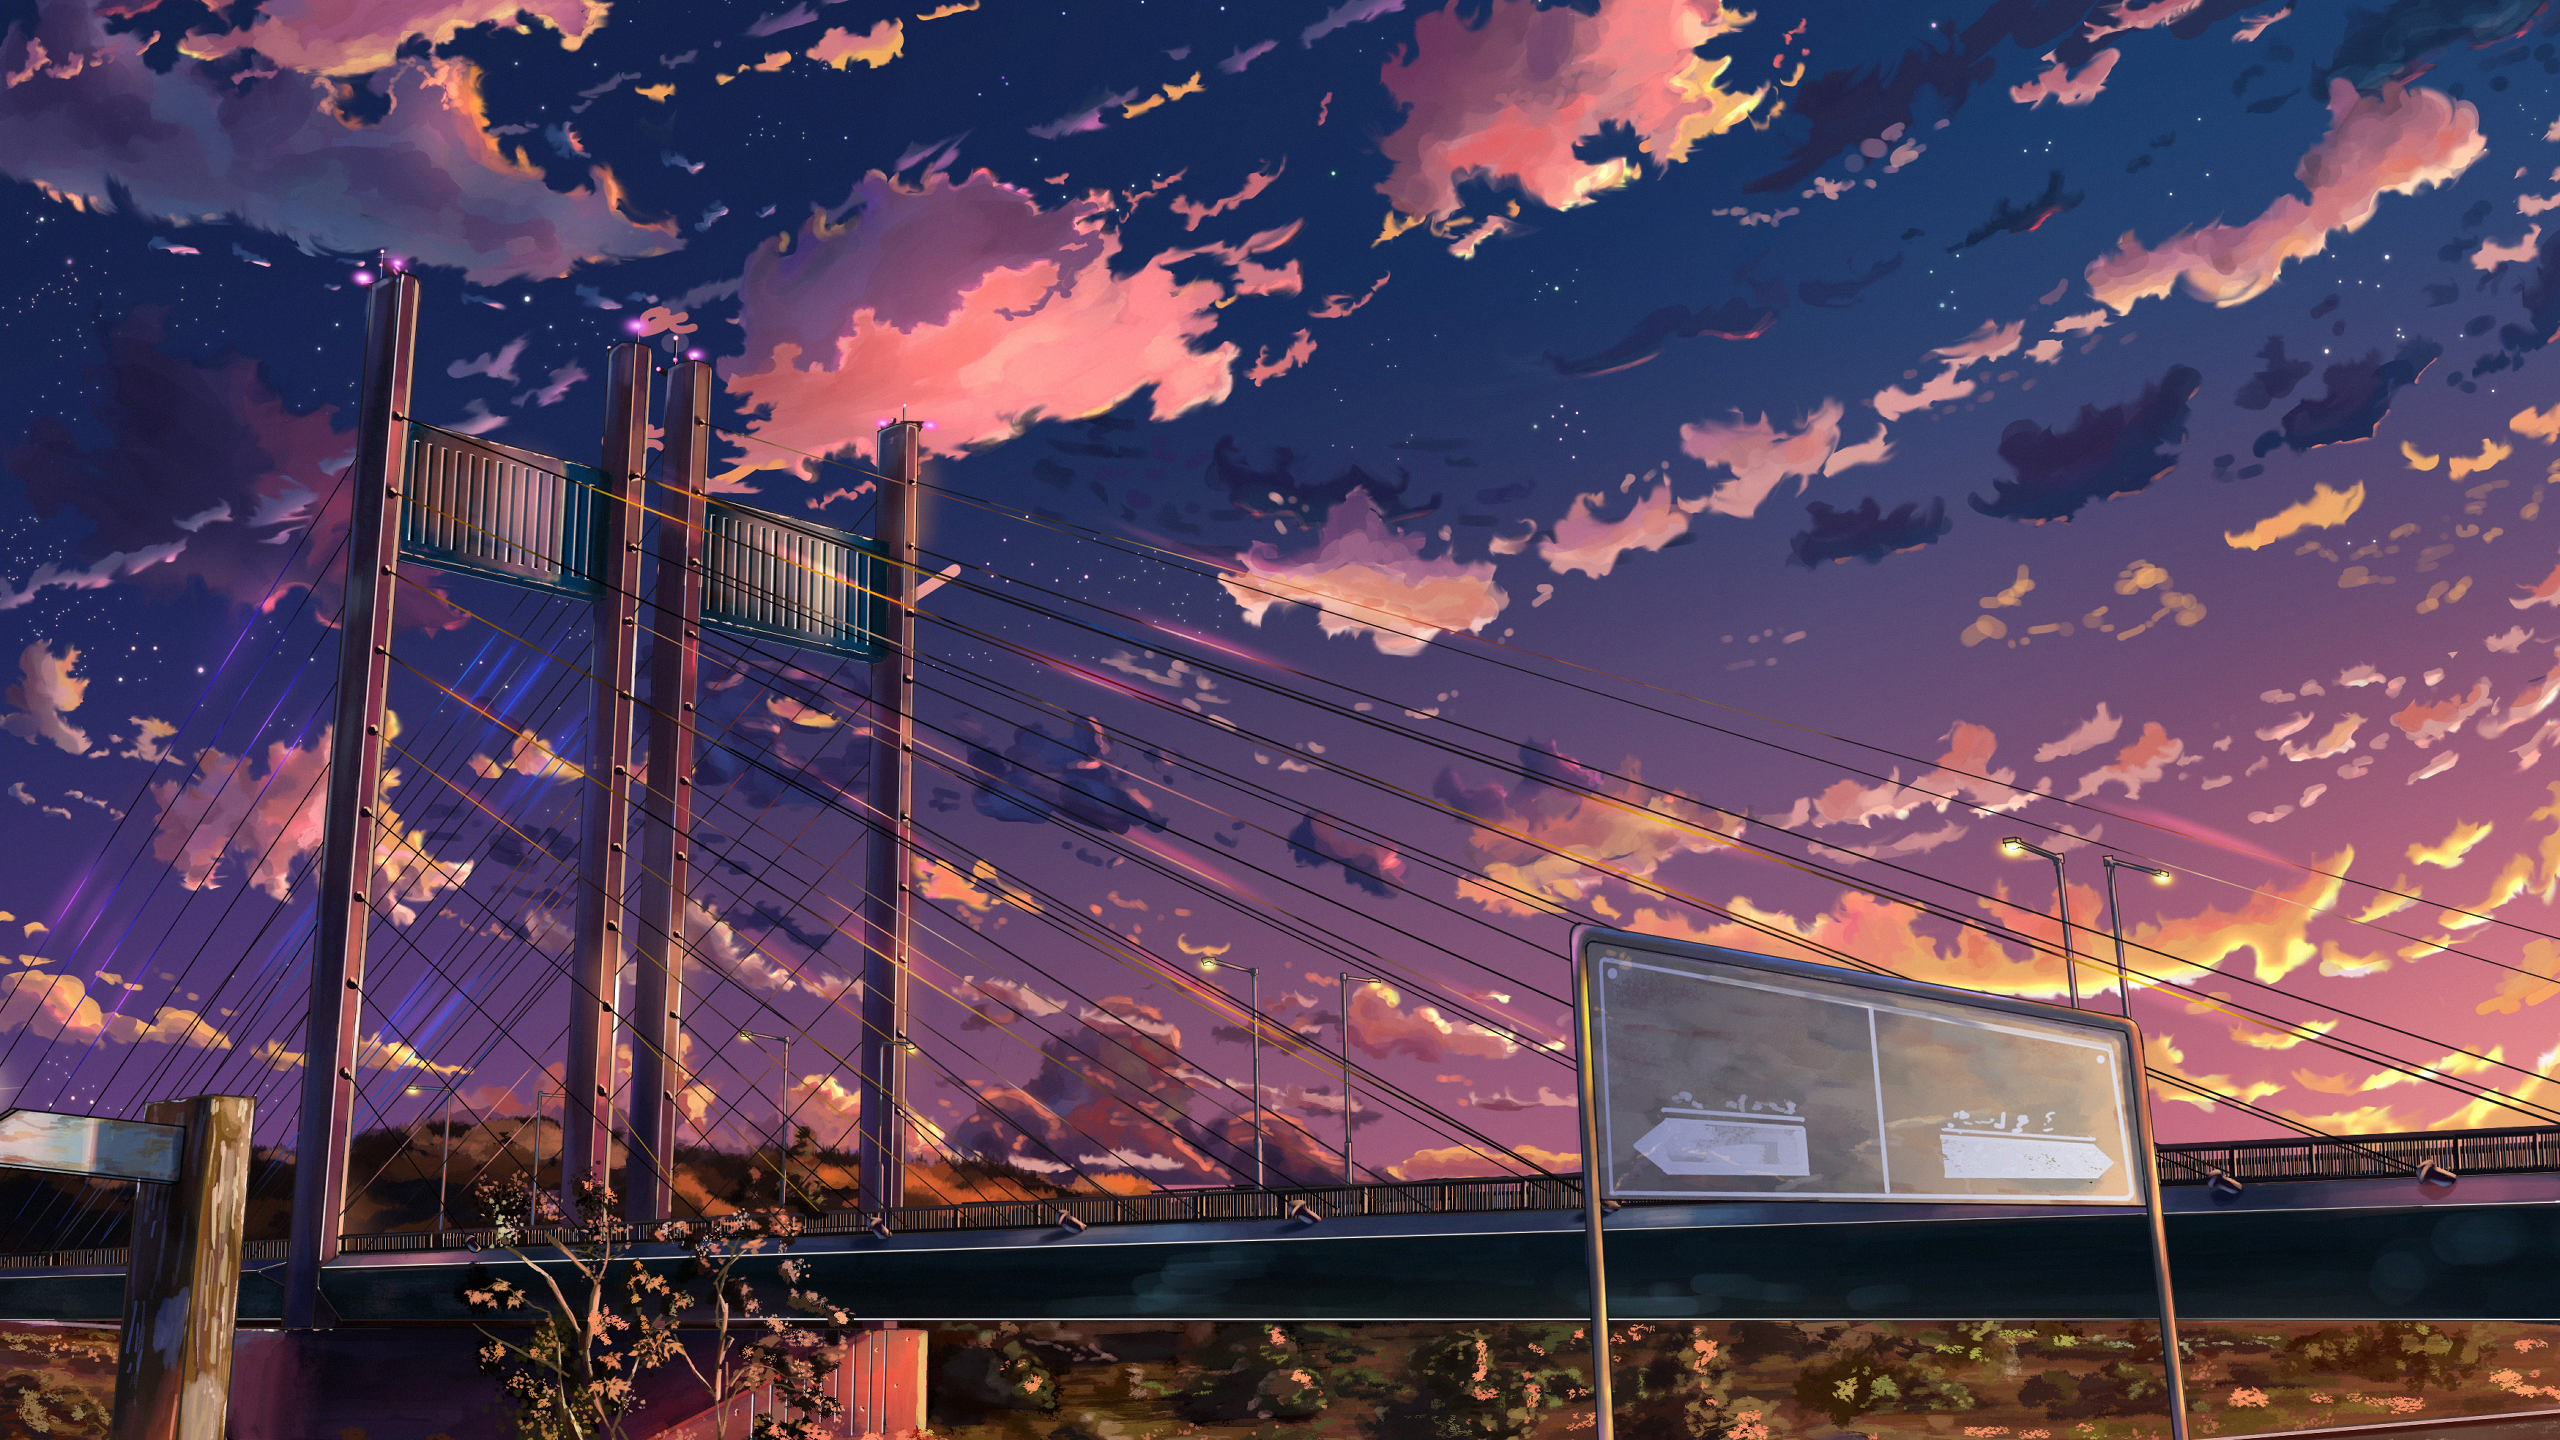  2560x1440 Hintergrundbild 2560x1440. Anime Bridge Cityscape Sky Clouds Wallpaper:2560x1440